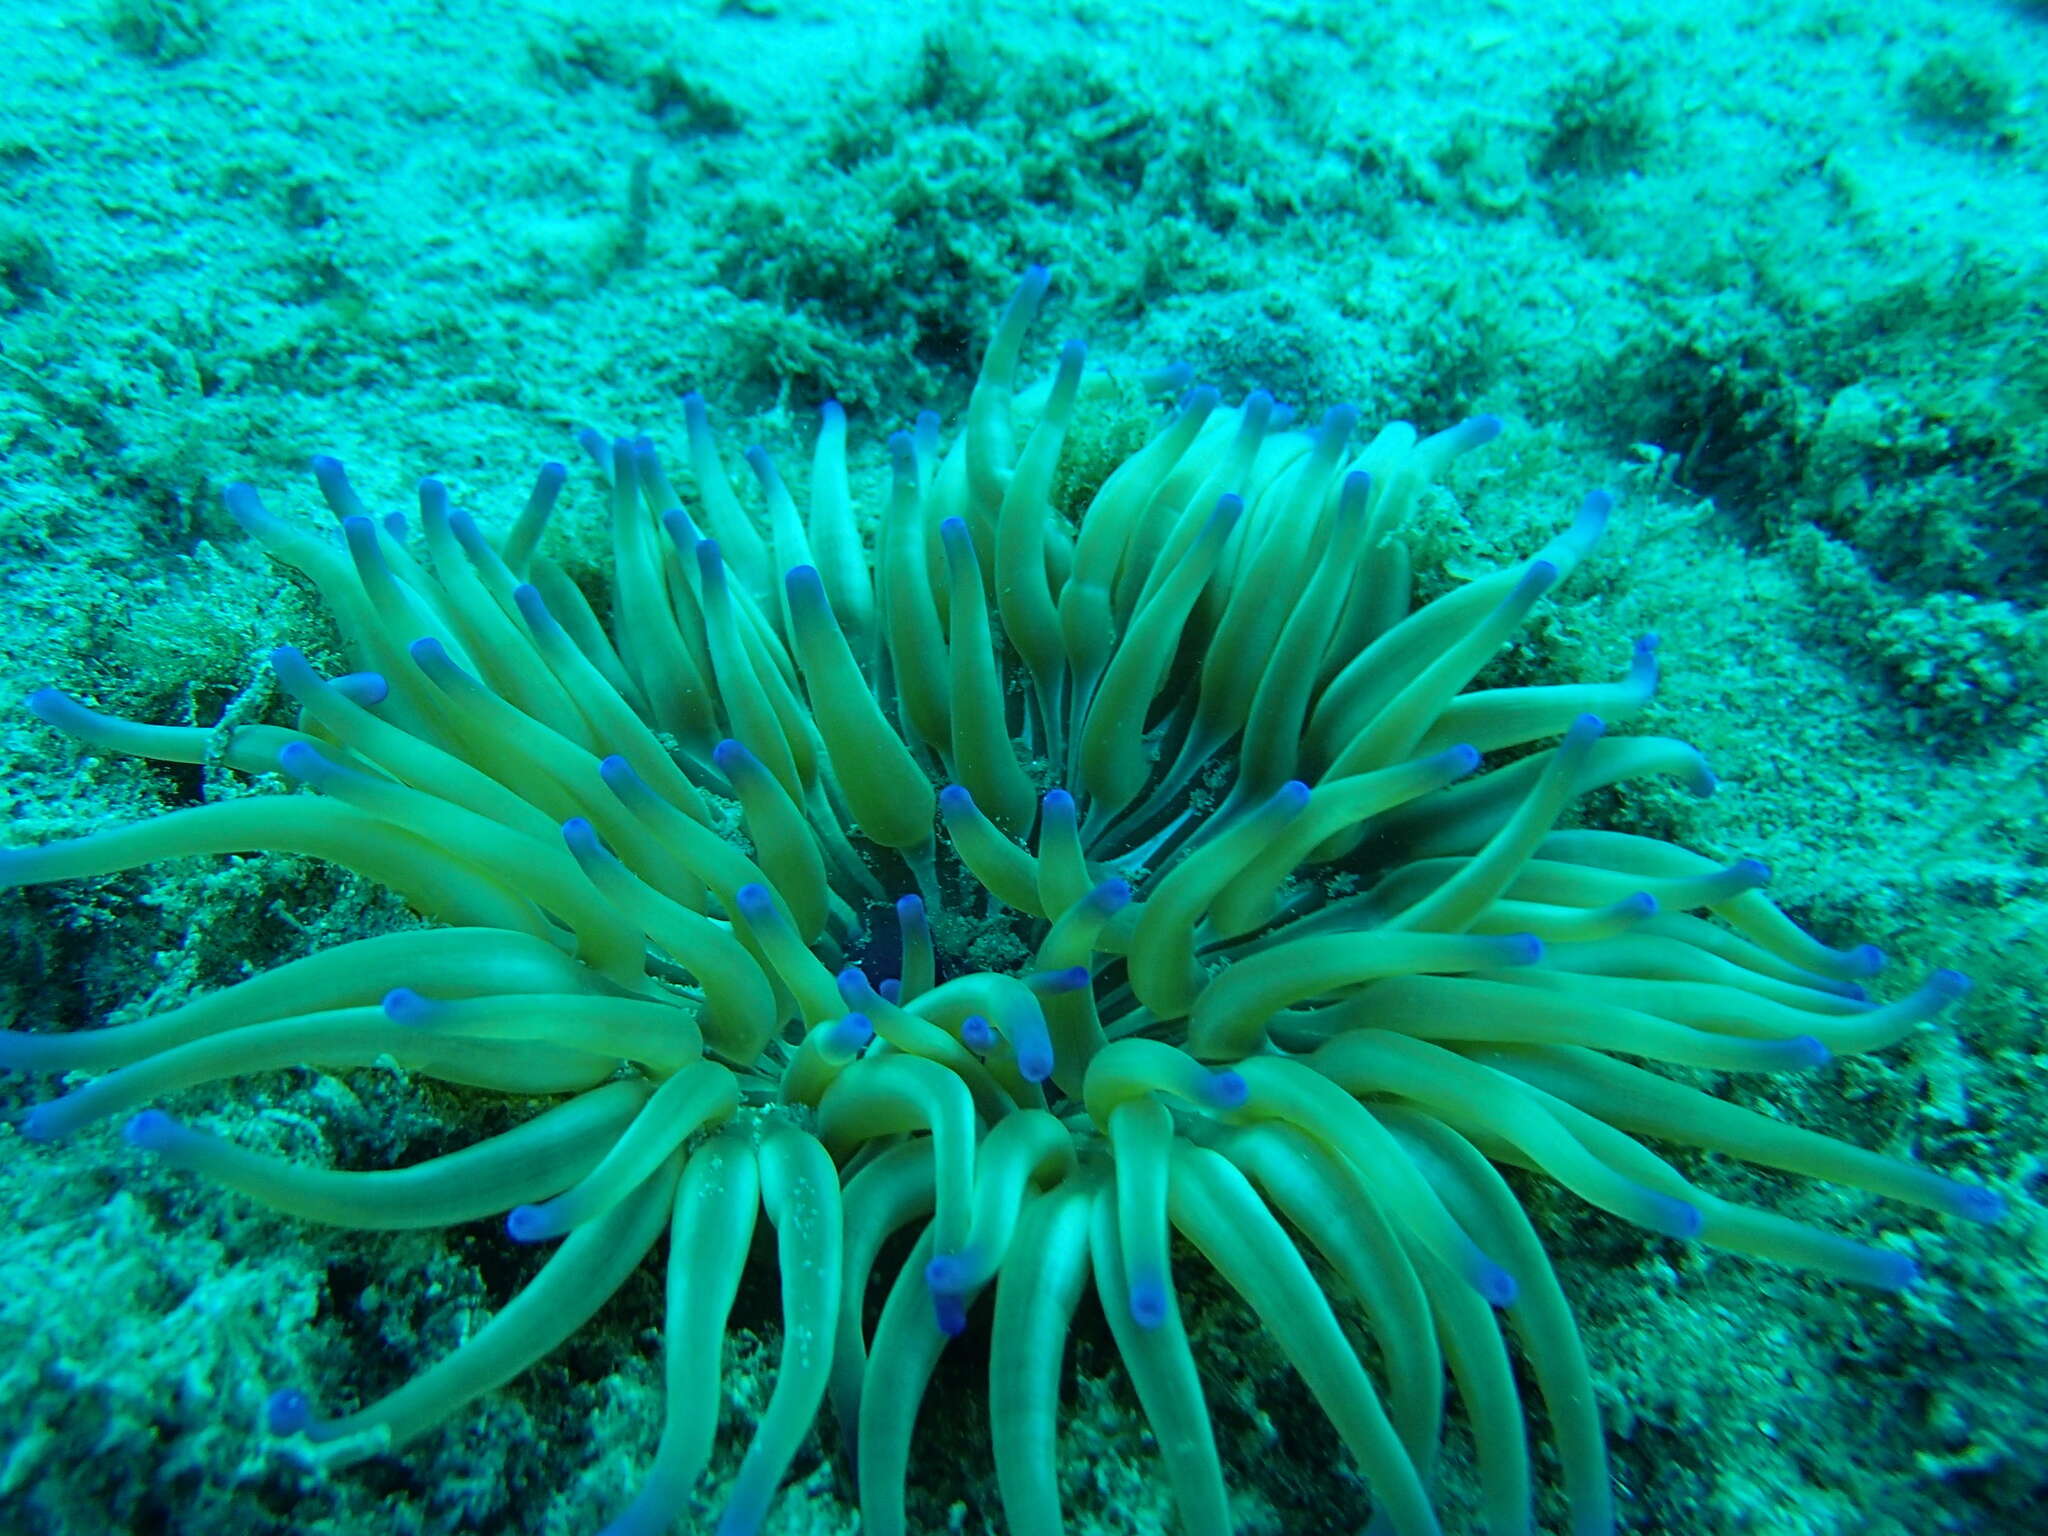 Image of Golden anemone